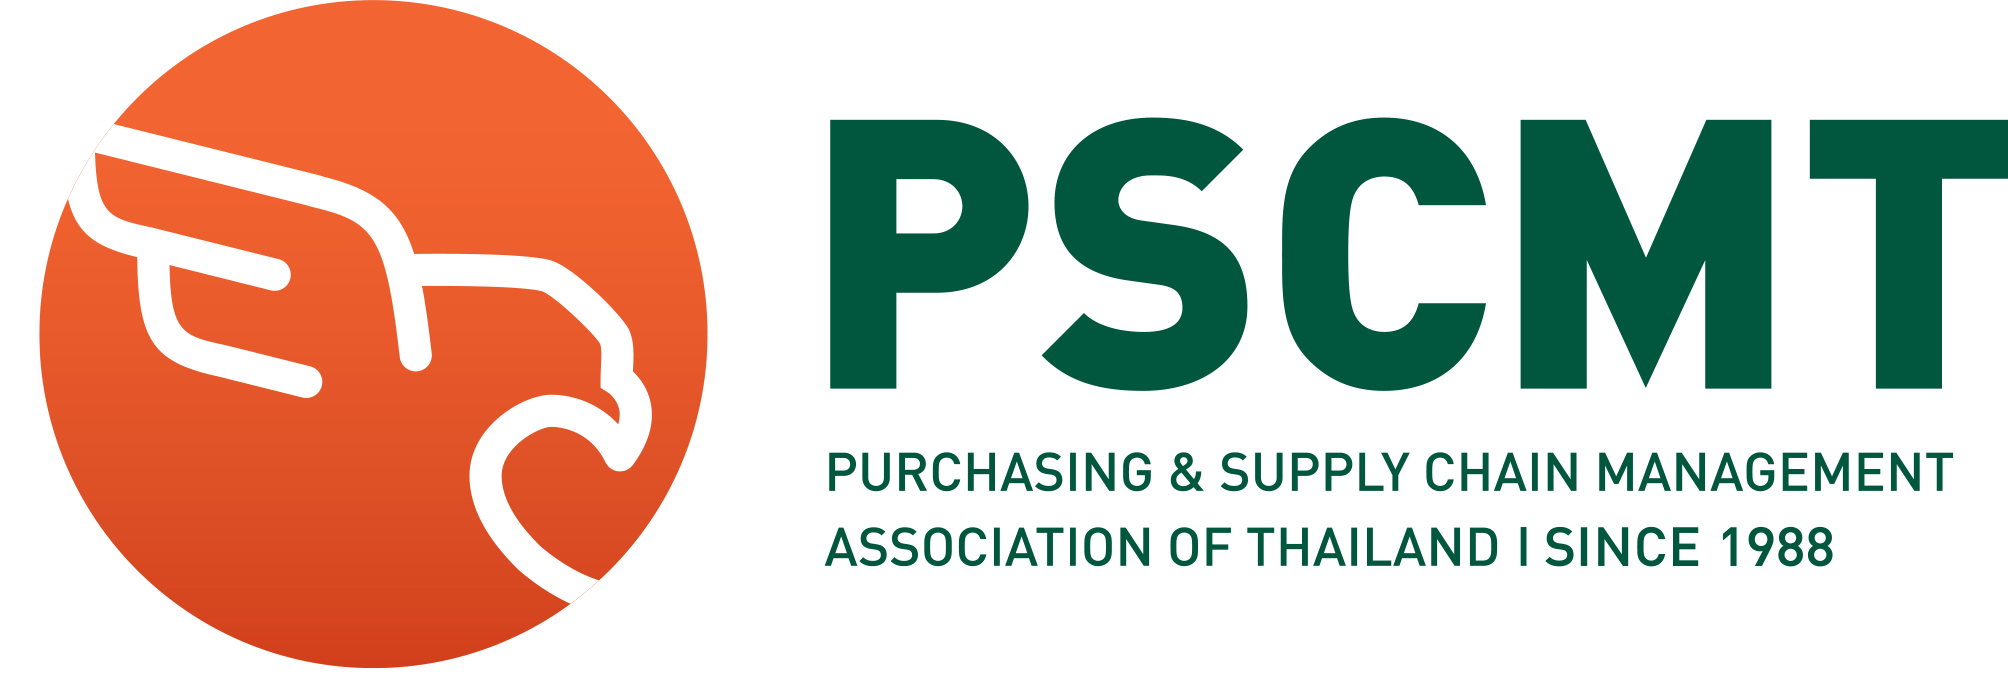 Purchasing & Supply Chain Management Association of Thailand (PSCMT)